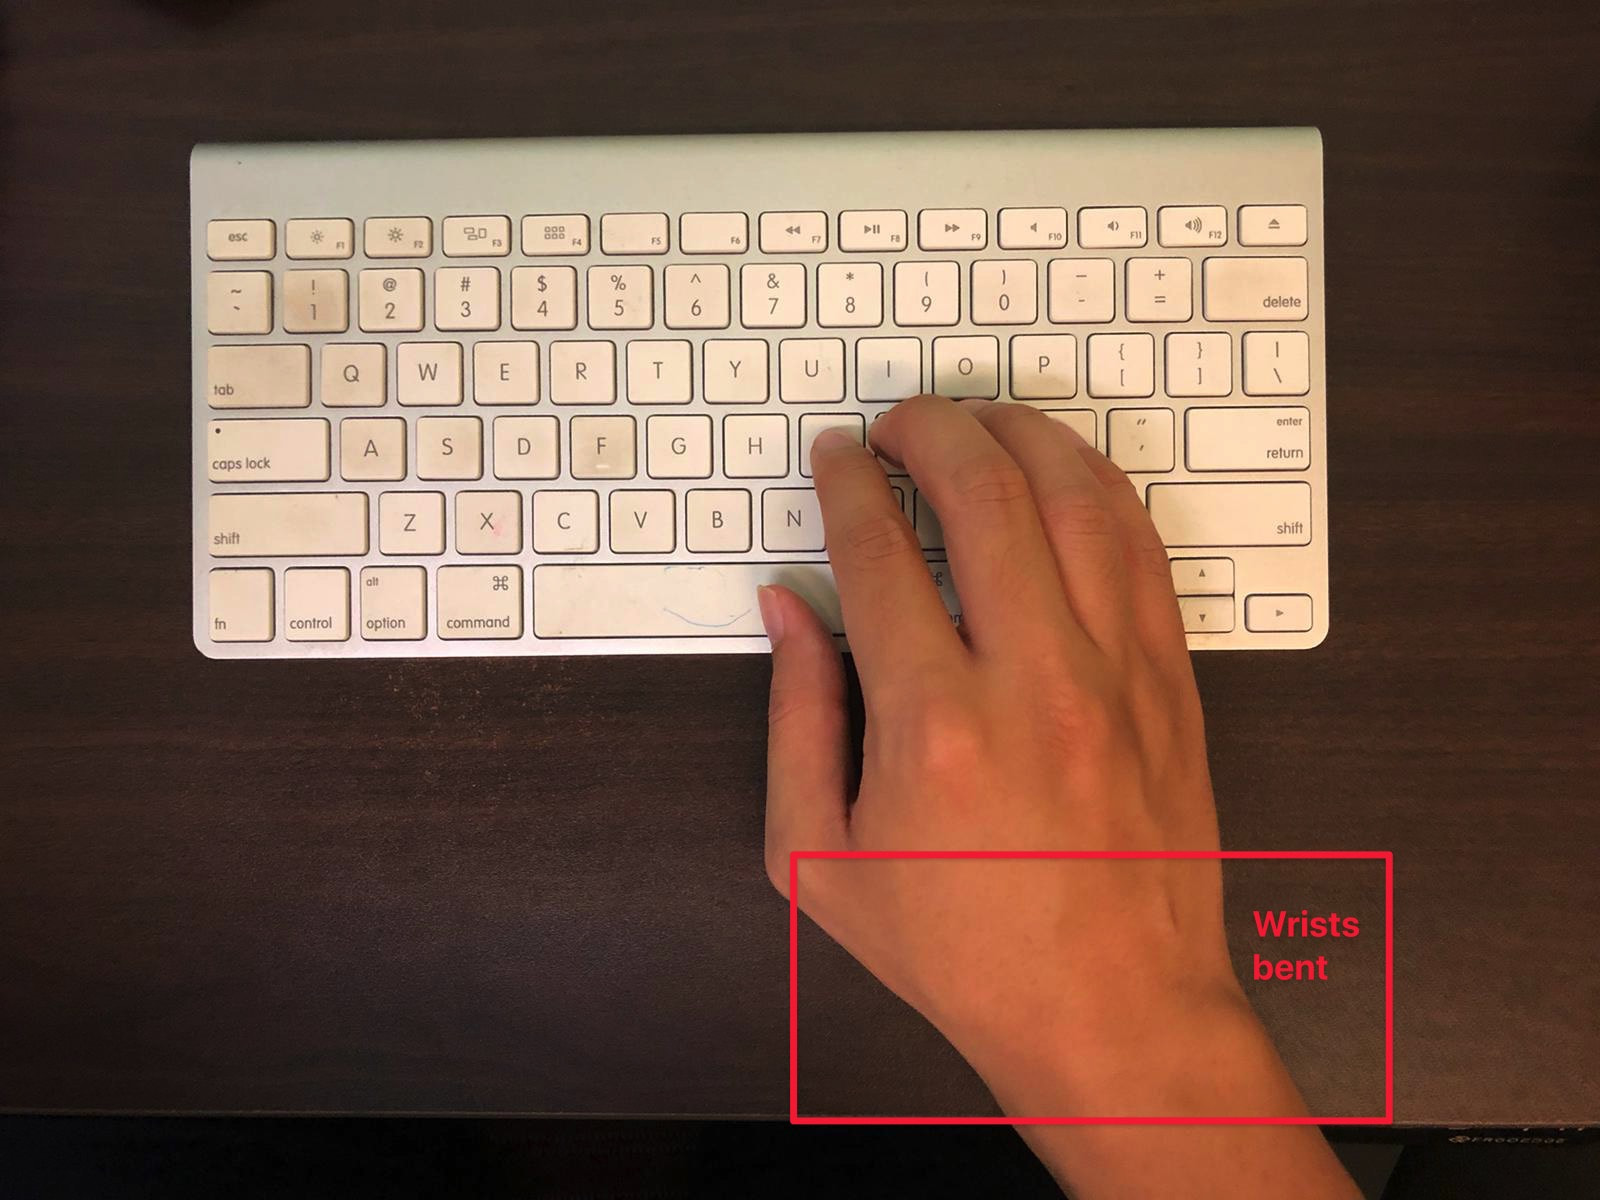 Wrists bent to accommodate the keyboard